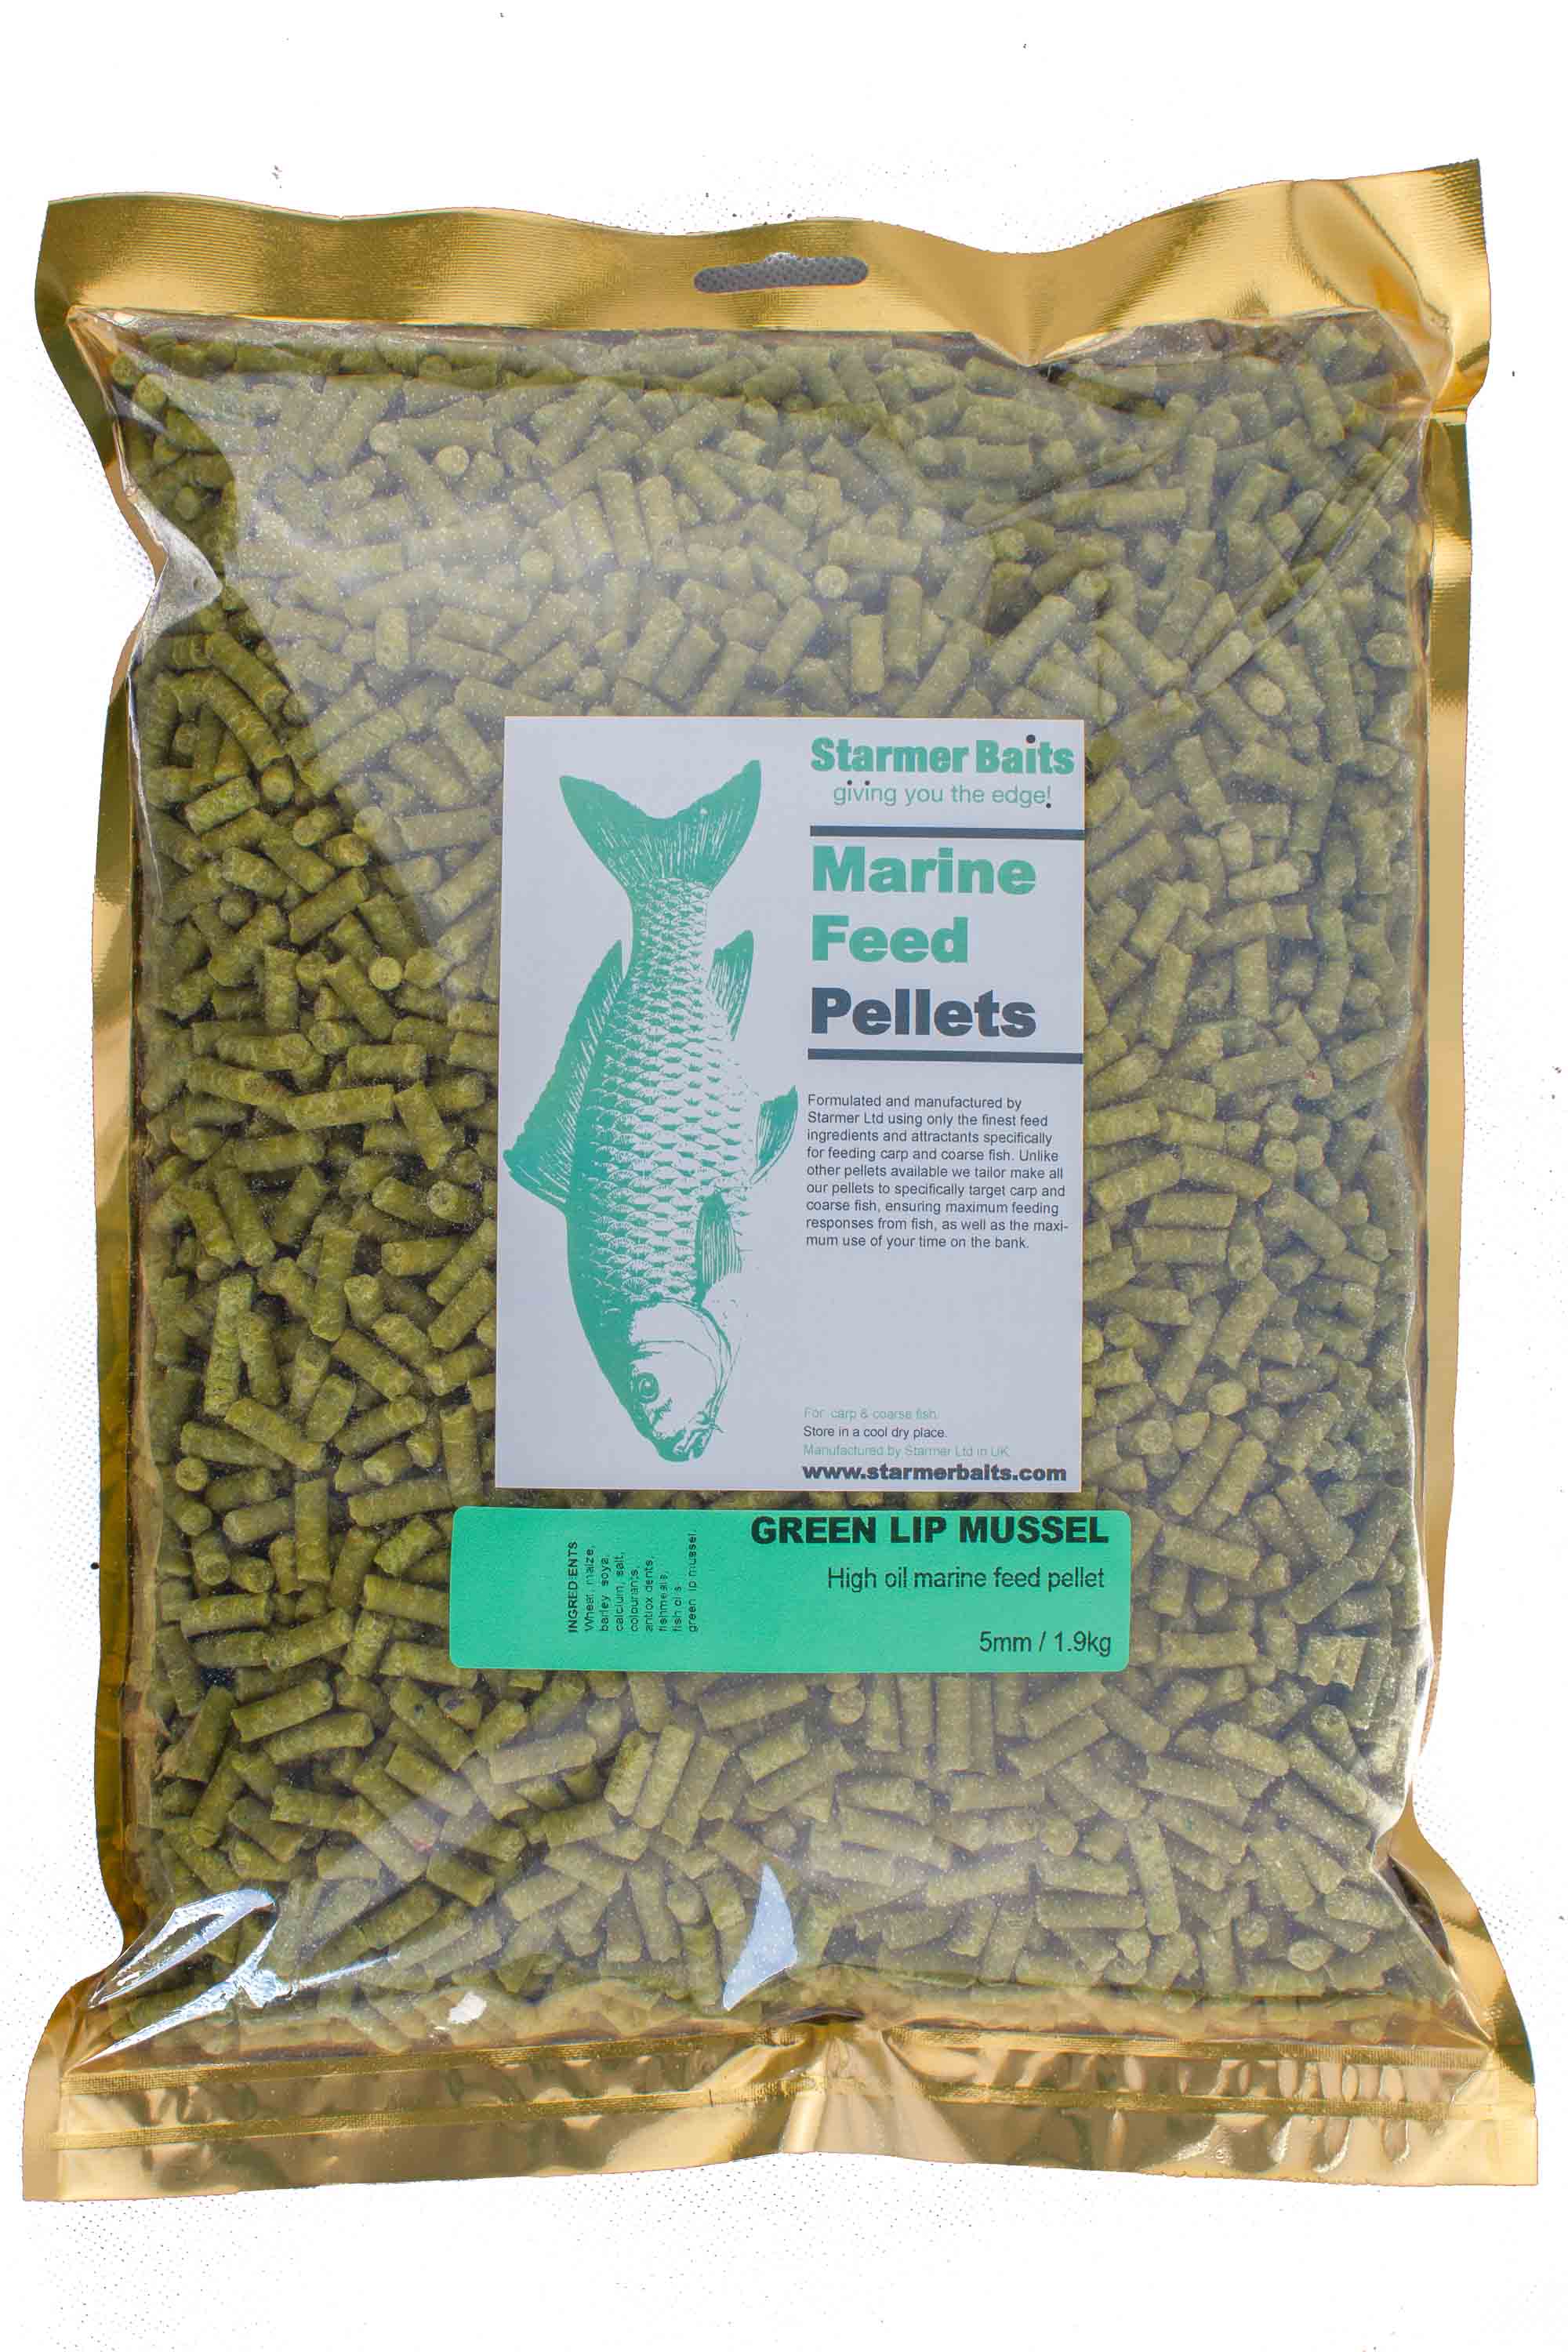 Green lip mussel marine feed pellets for carp & coarse fishing 5mm